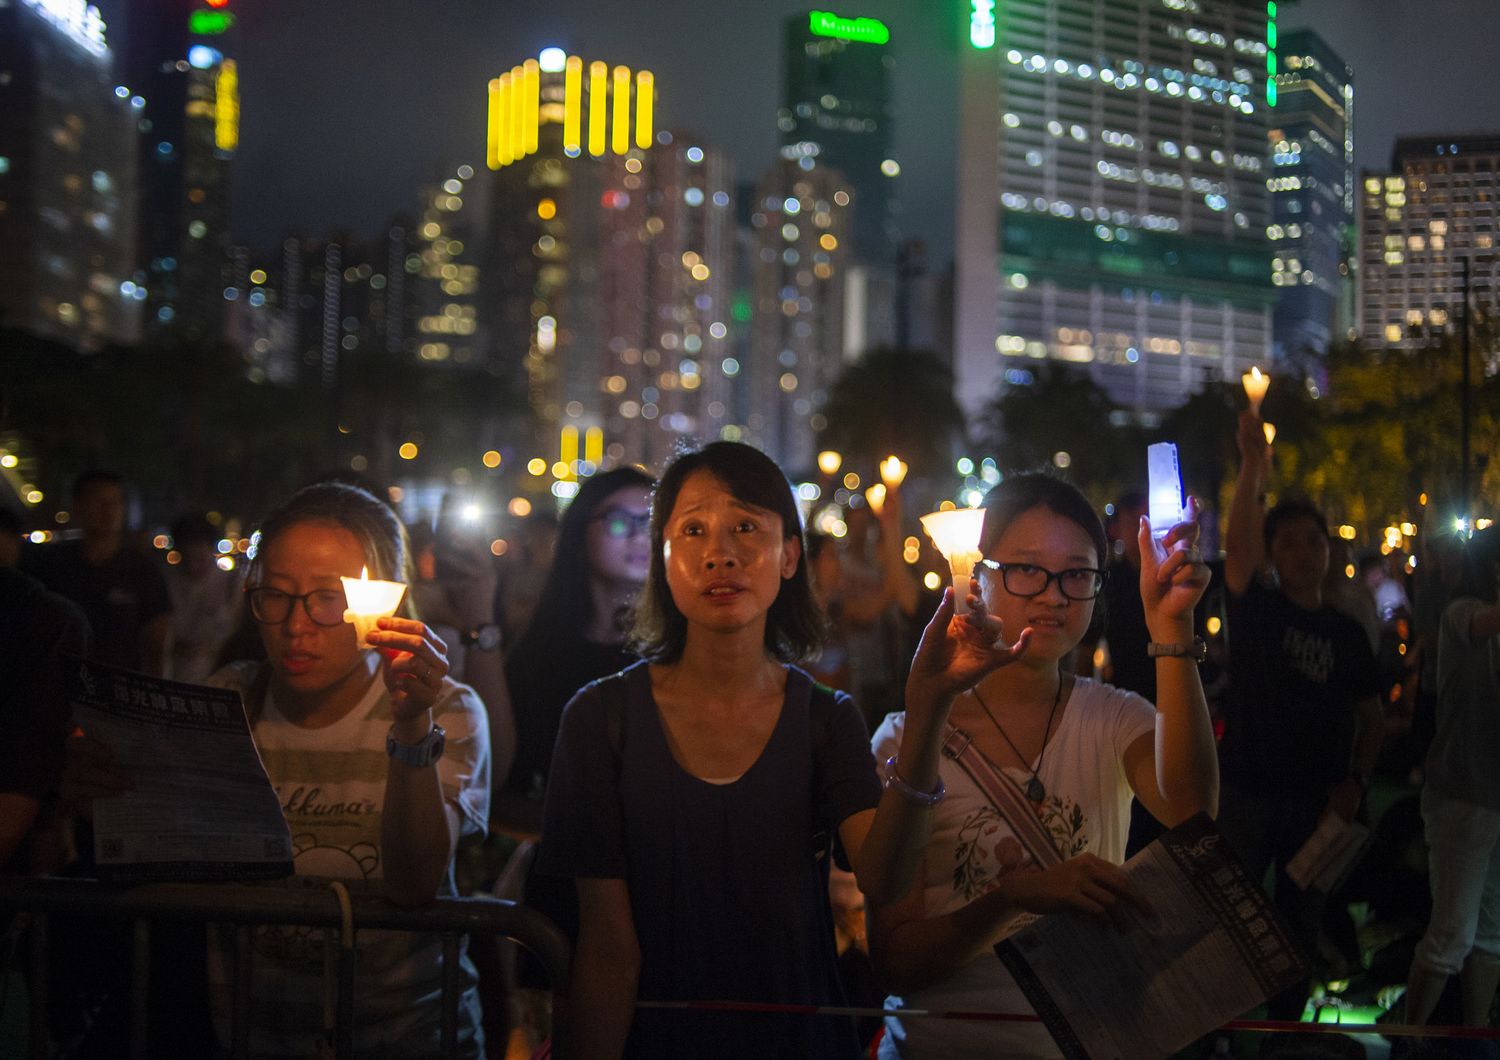 Hong Kong vietata veglia tiananmen per Covid